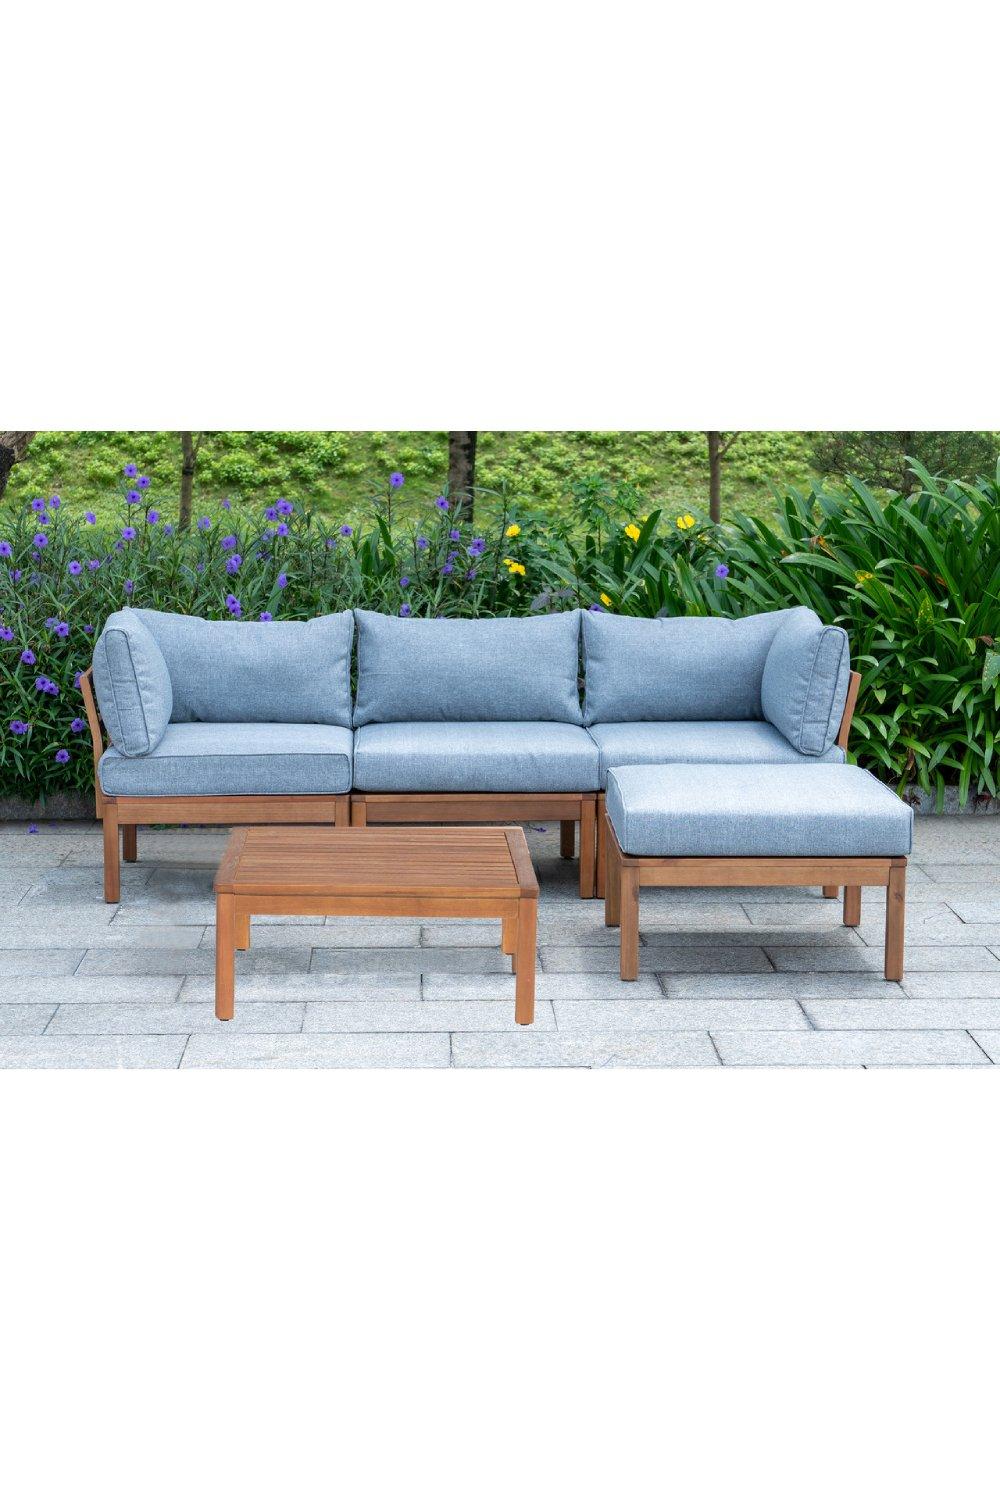 Cali - Wooden Chaise Garden Lounge Set - 3 Seats